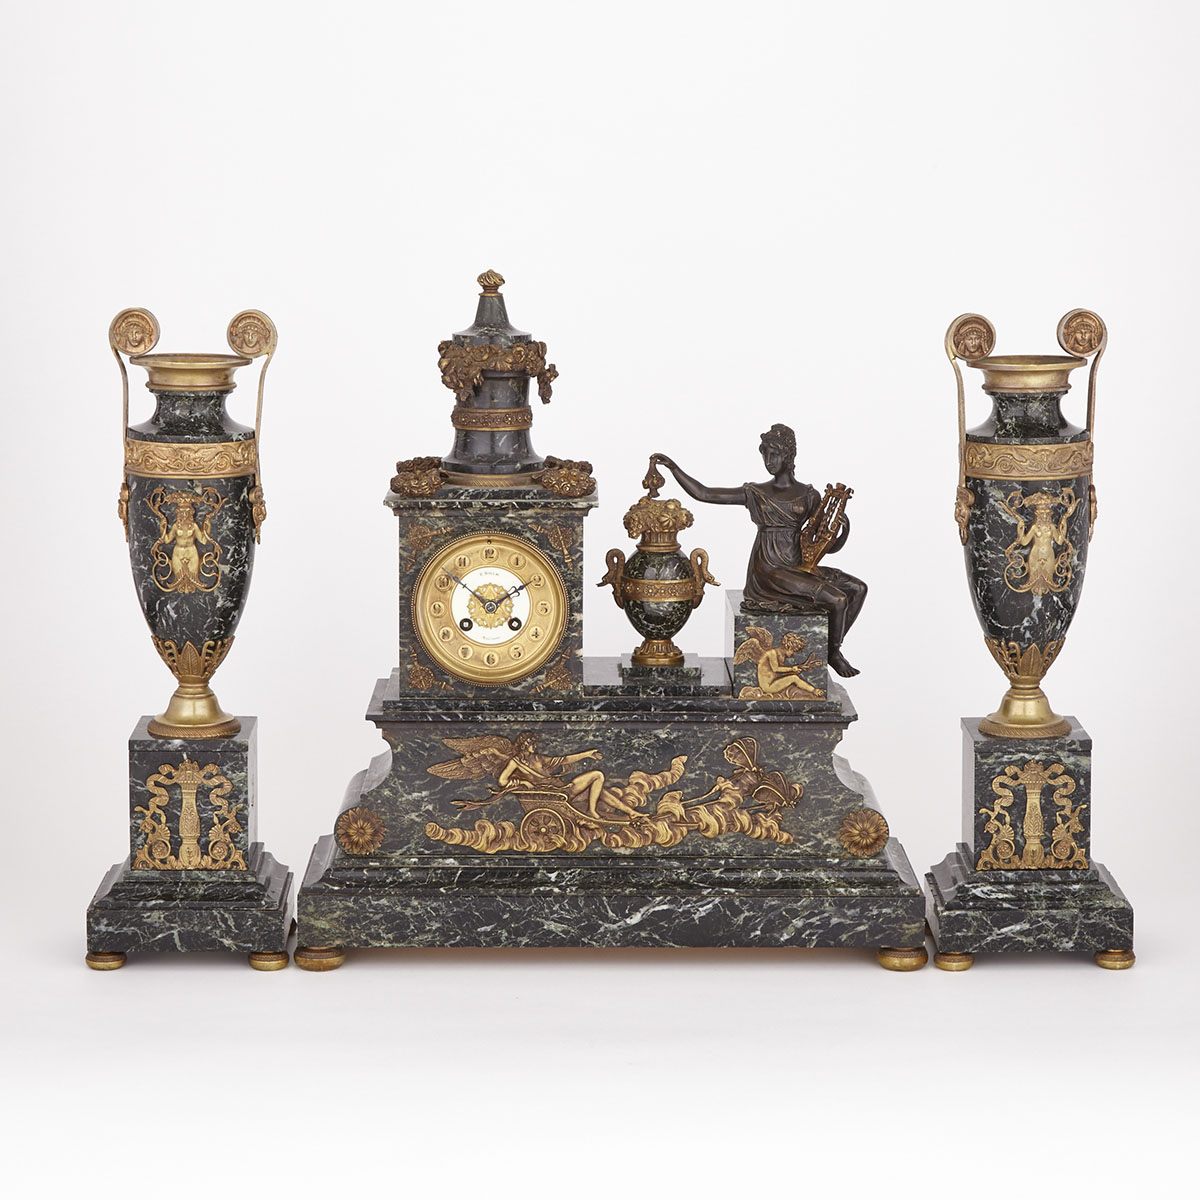 Three Piece Napoleon III Gilt and Patinated Bronze Mounted Verde Antico Marble Clock Garniture, c.1900